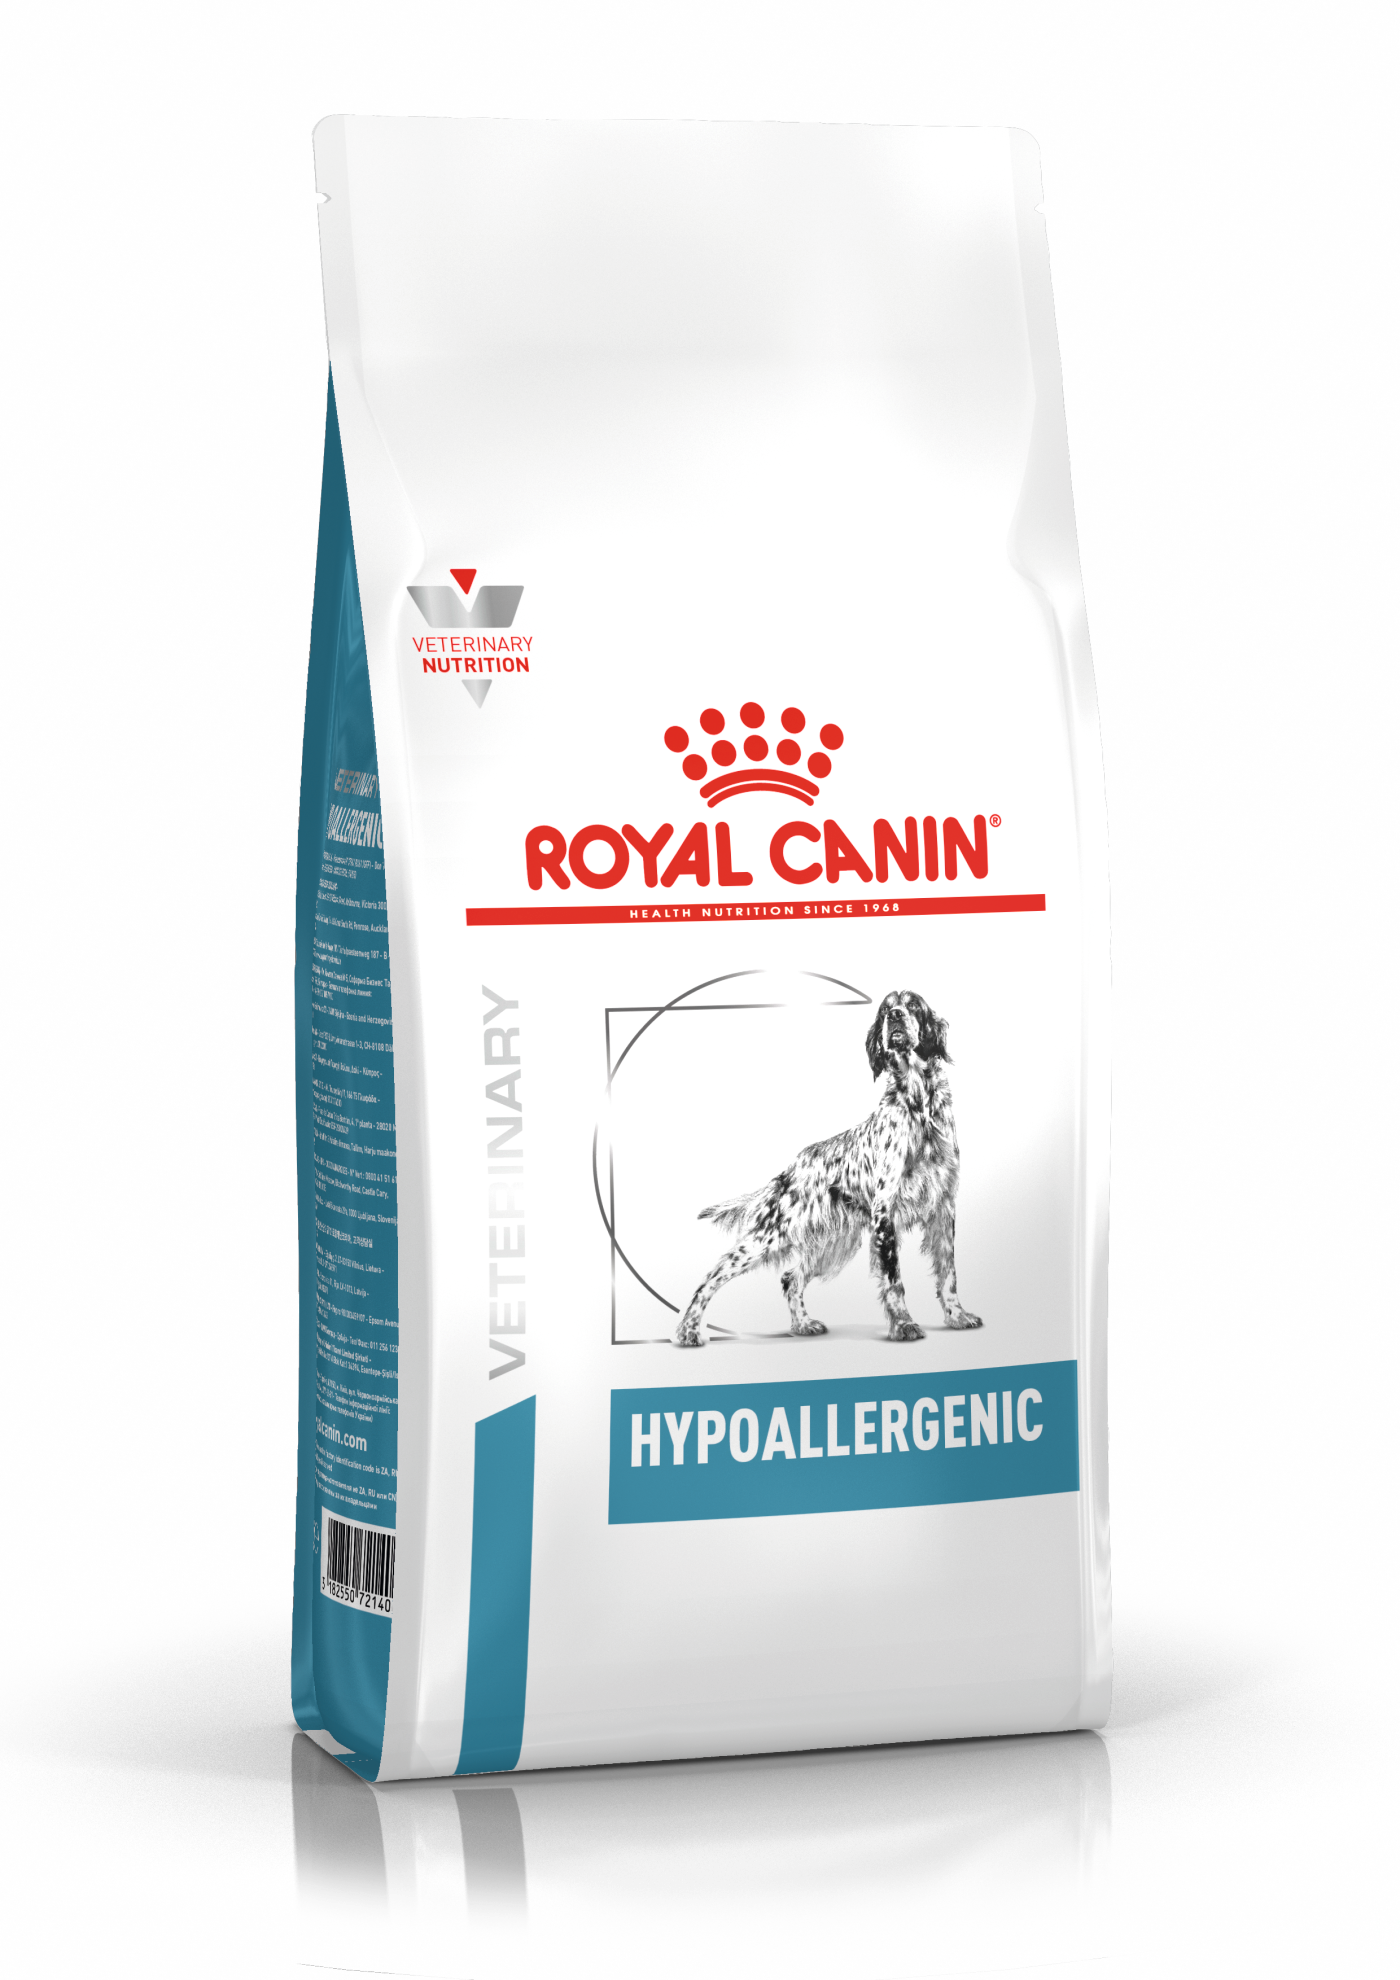 royal canin hydrolyzed protein ingredients